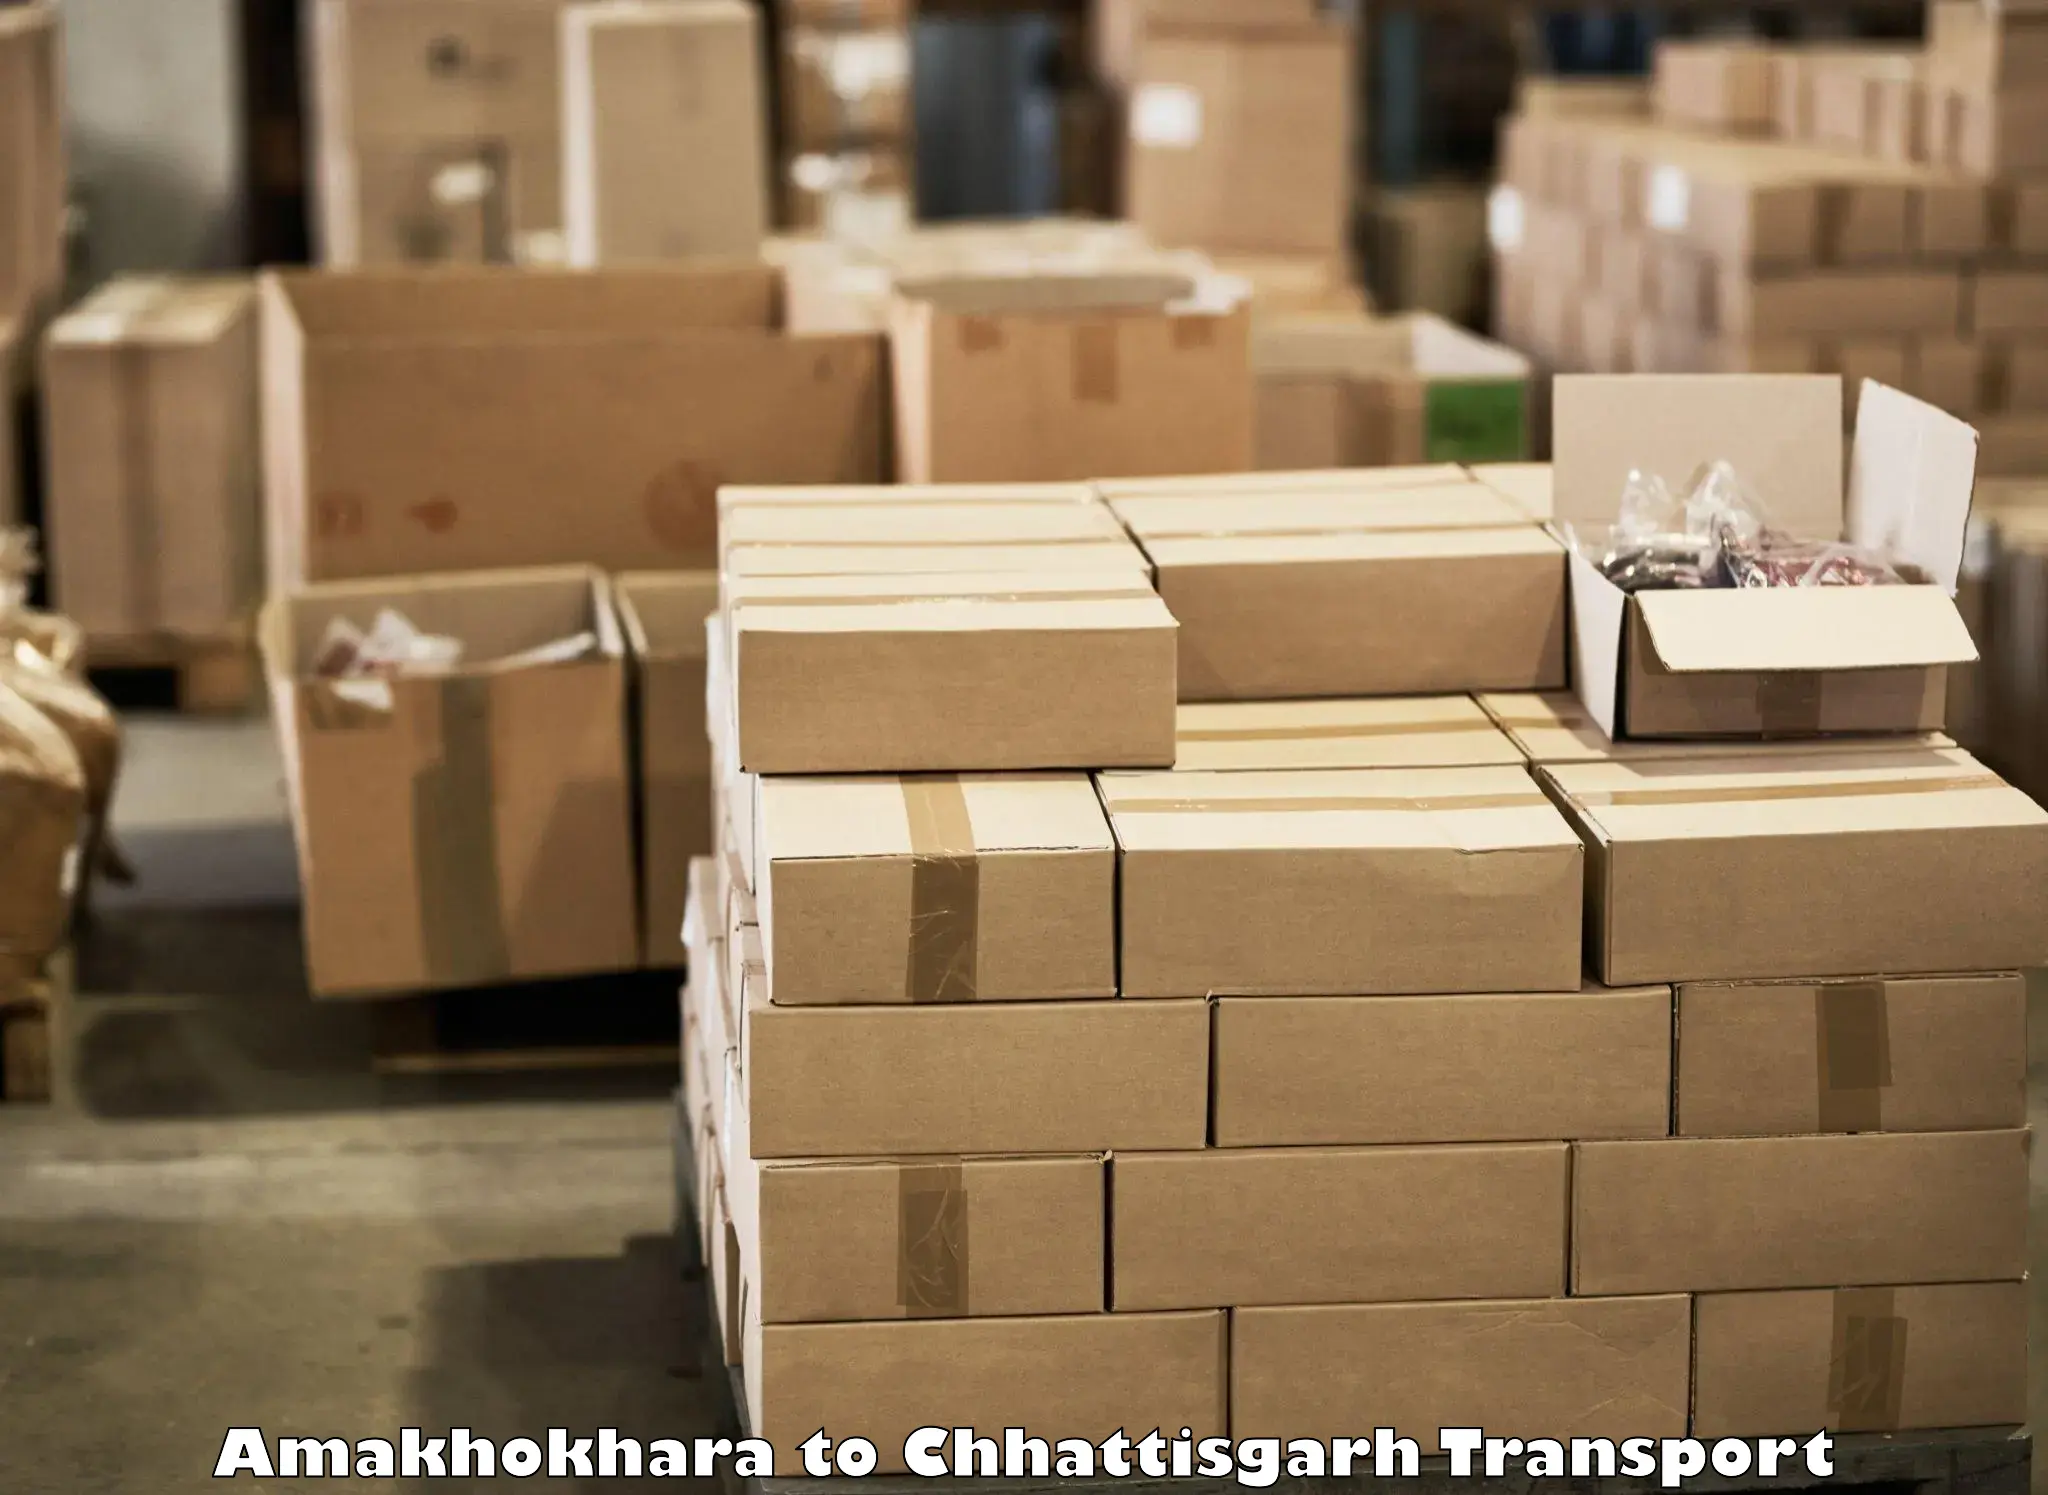 Vehicle transport services in Amakhokhara to Patna Chhattisgarh